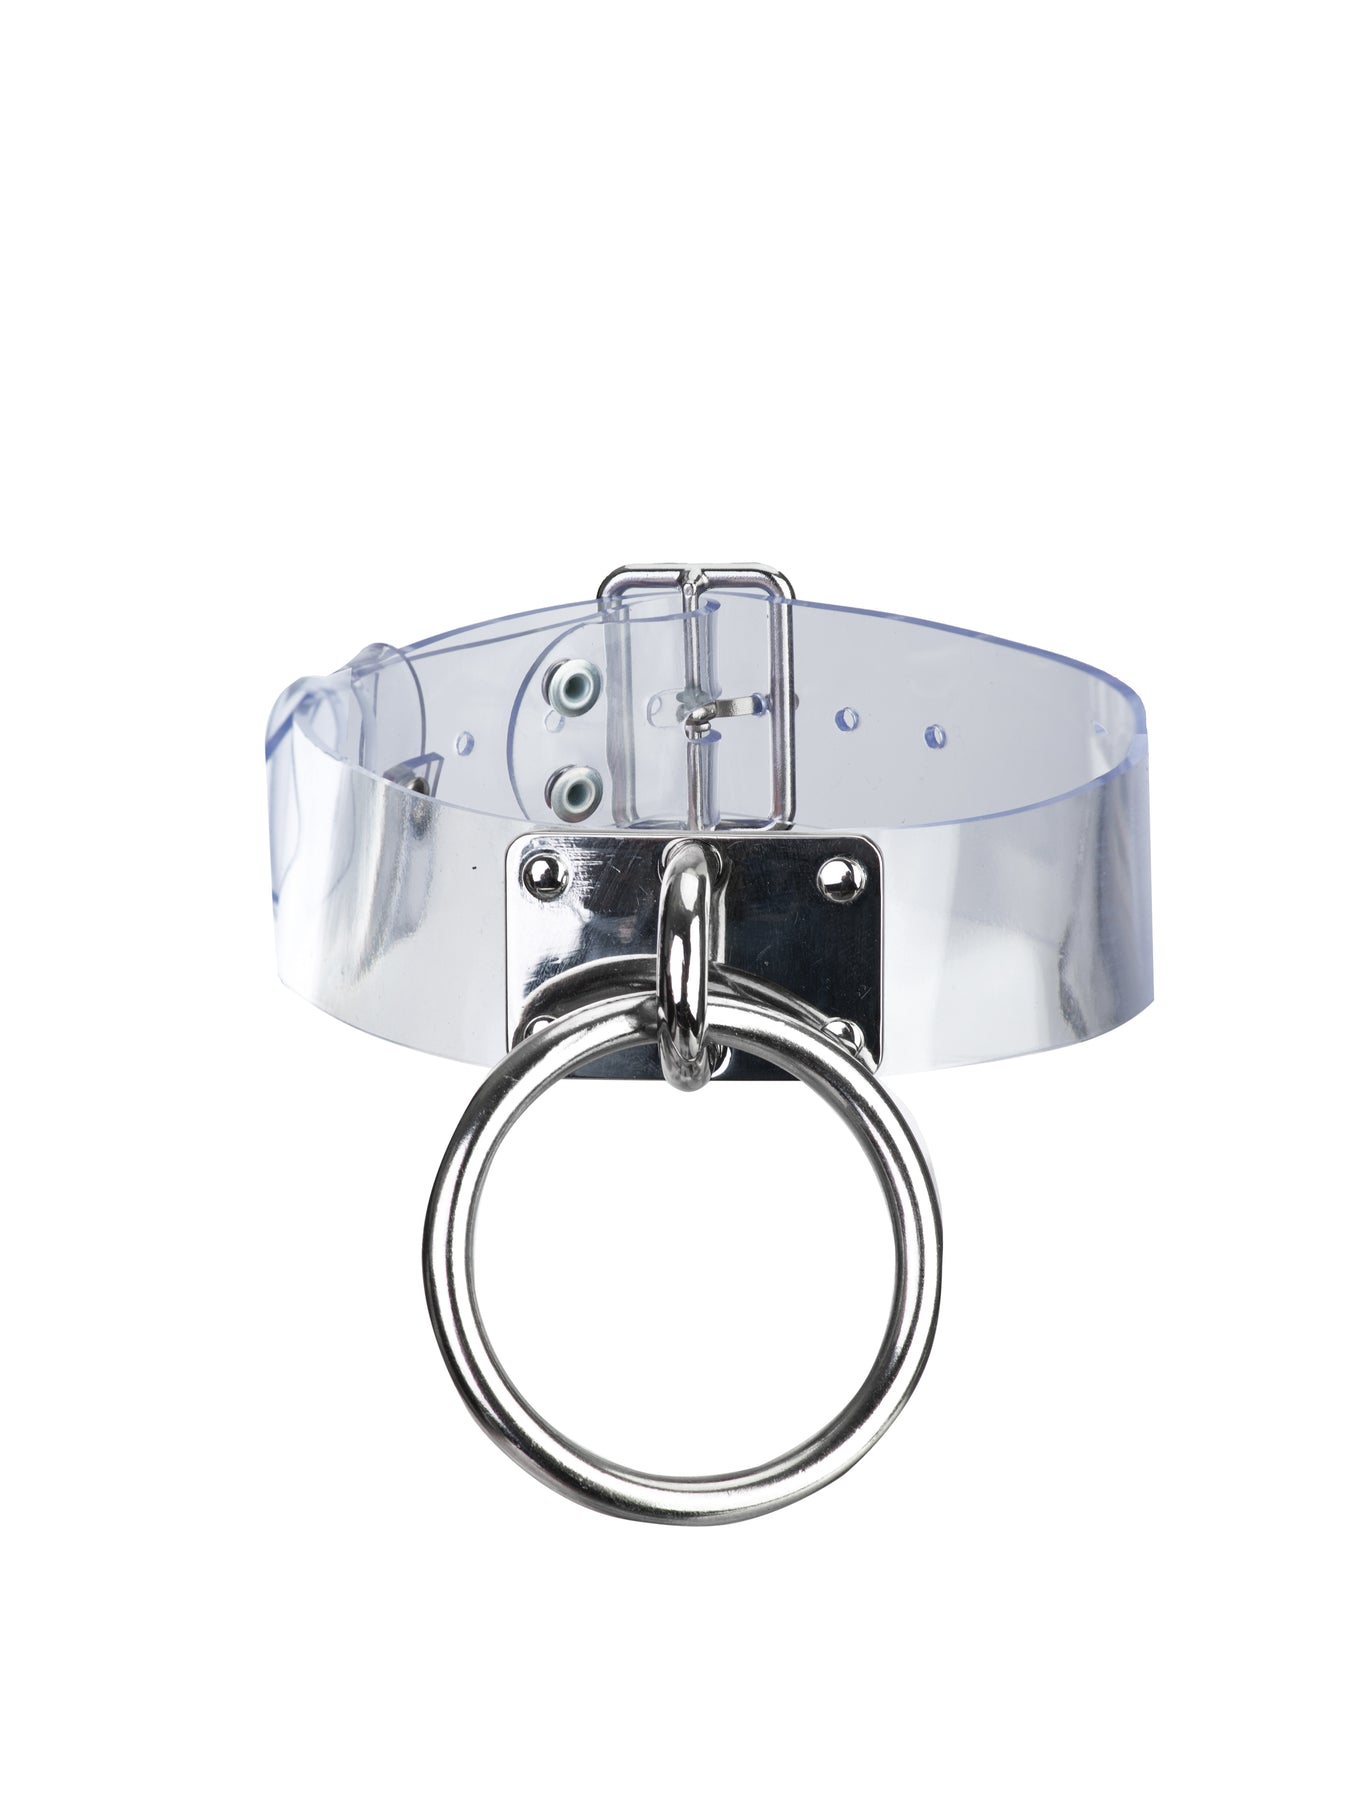 Rainy Choker - buy online, Leather collars chokers in Bleak&Sleek, USA